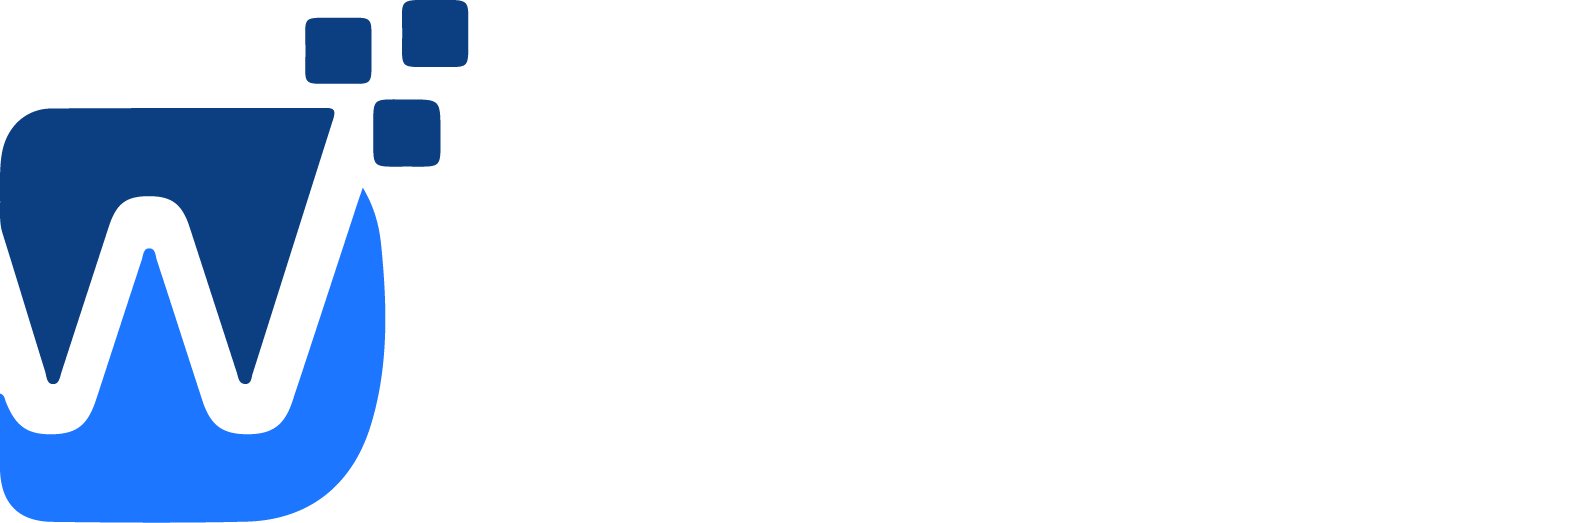 WebFinance Digital i Sverige AB